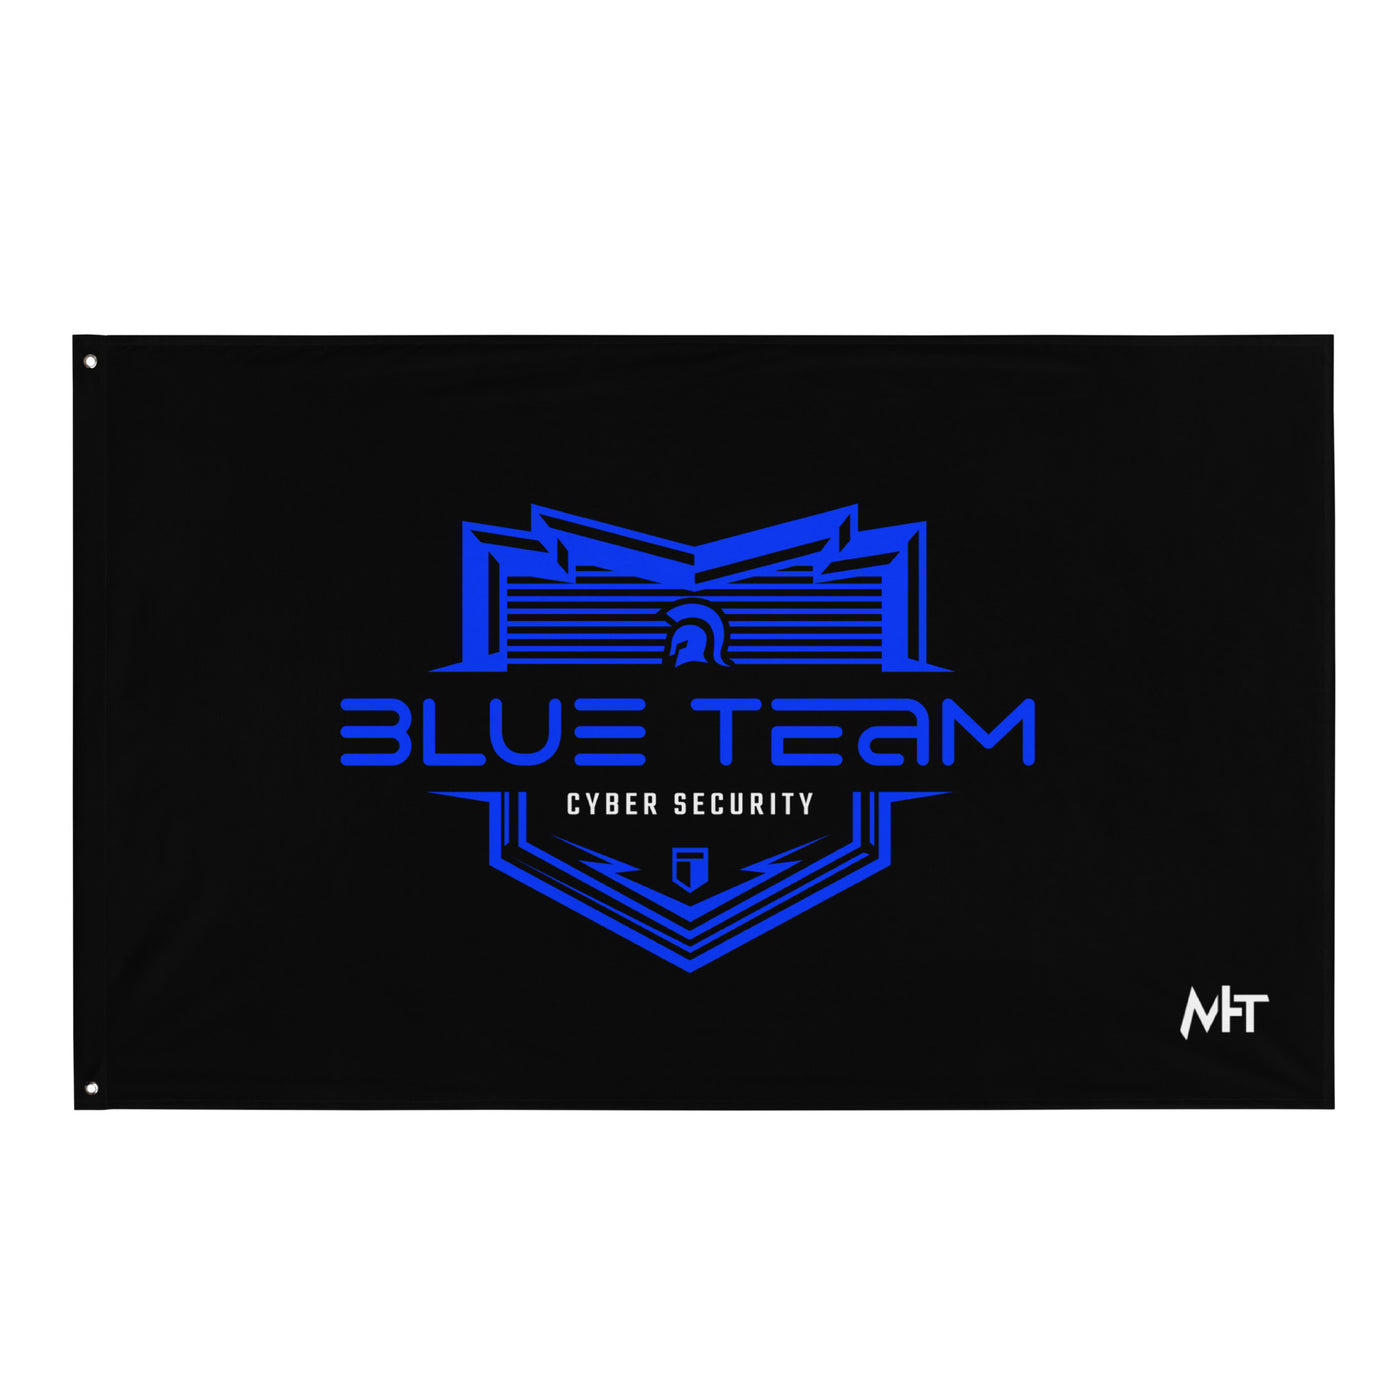 Cyber Security Blue Team V15 - Flag